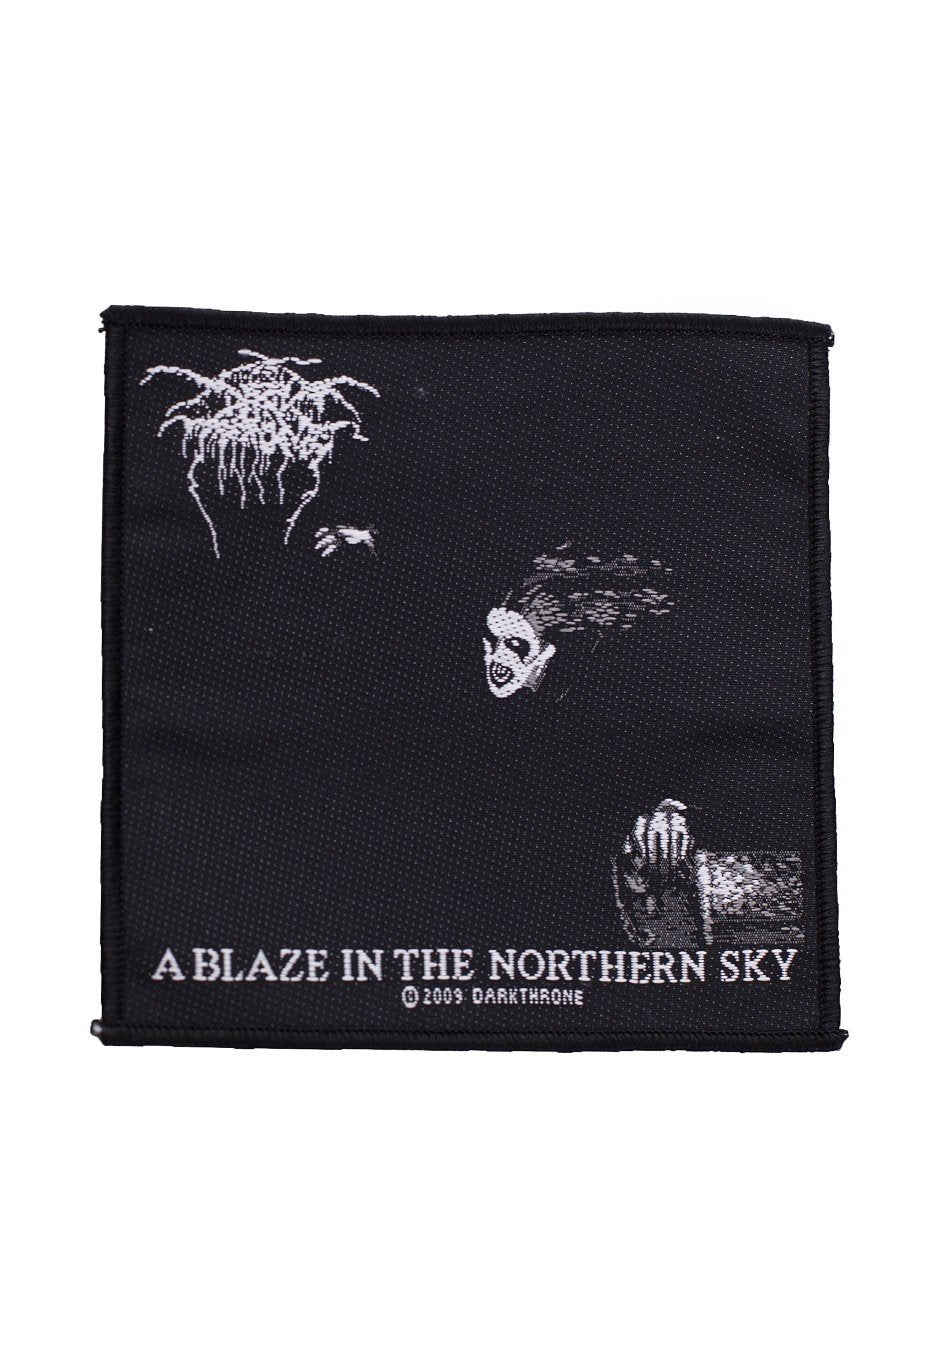 Darkthrone - A Blaze In The Northern Sky - Patch